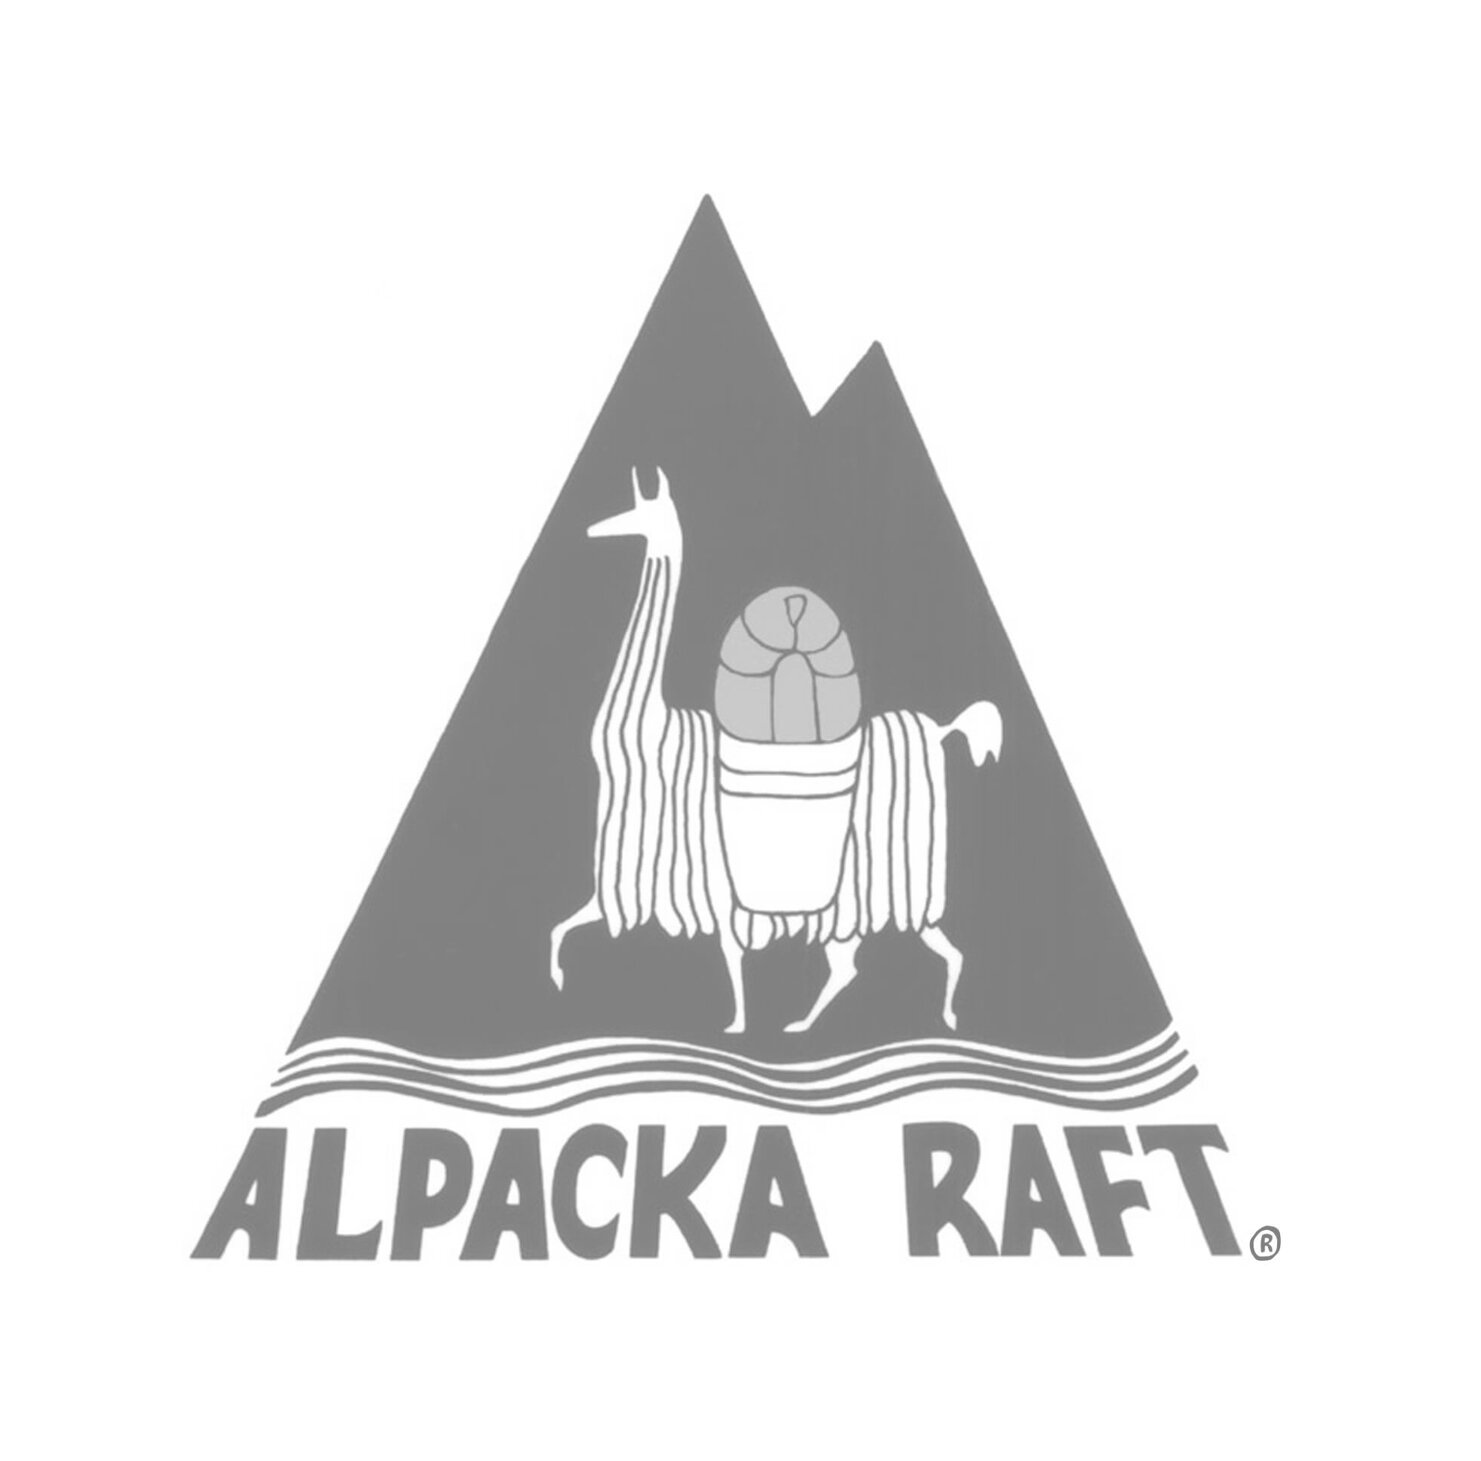 Alpacka-Raft-logo copy.jpg